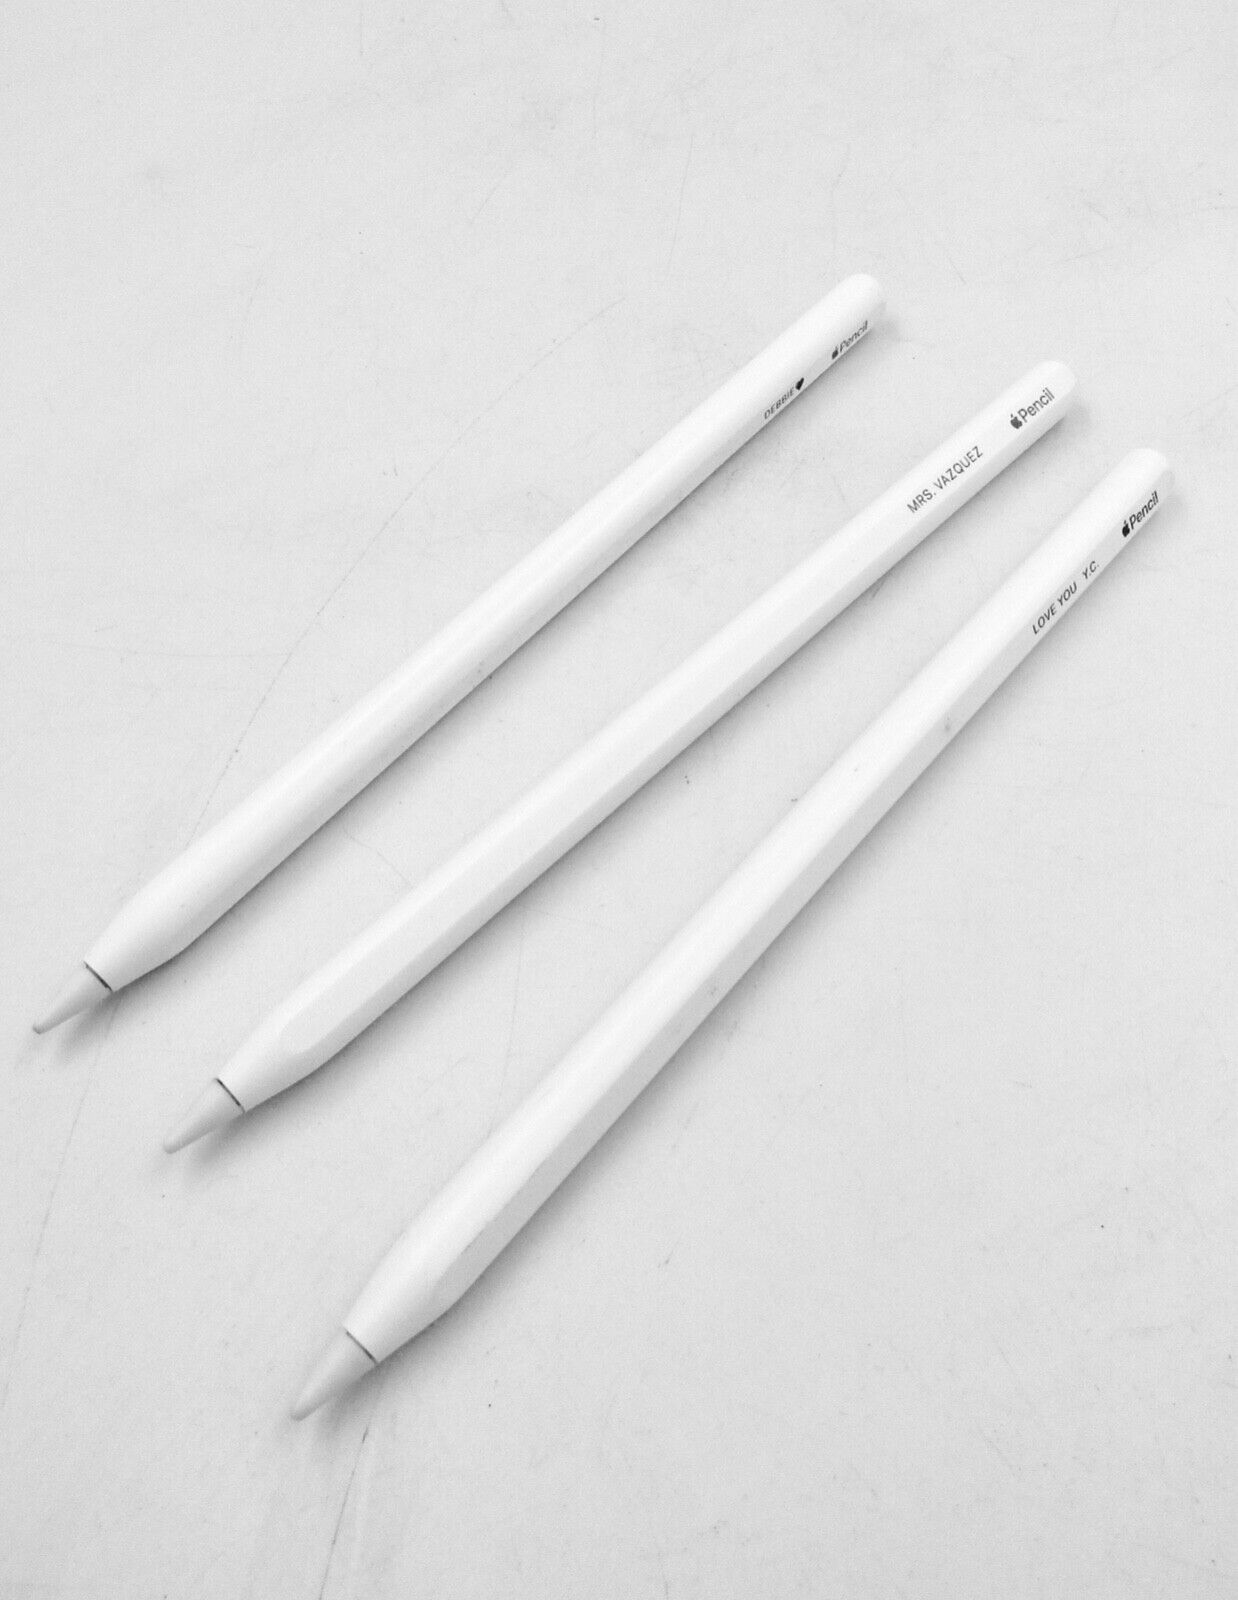 Genuine Apple Pencil 2nd Generation, Gen 2 Stylus Pen - Used, Personalized 